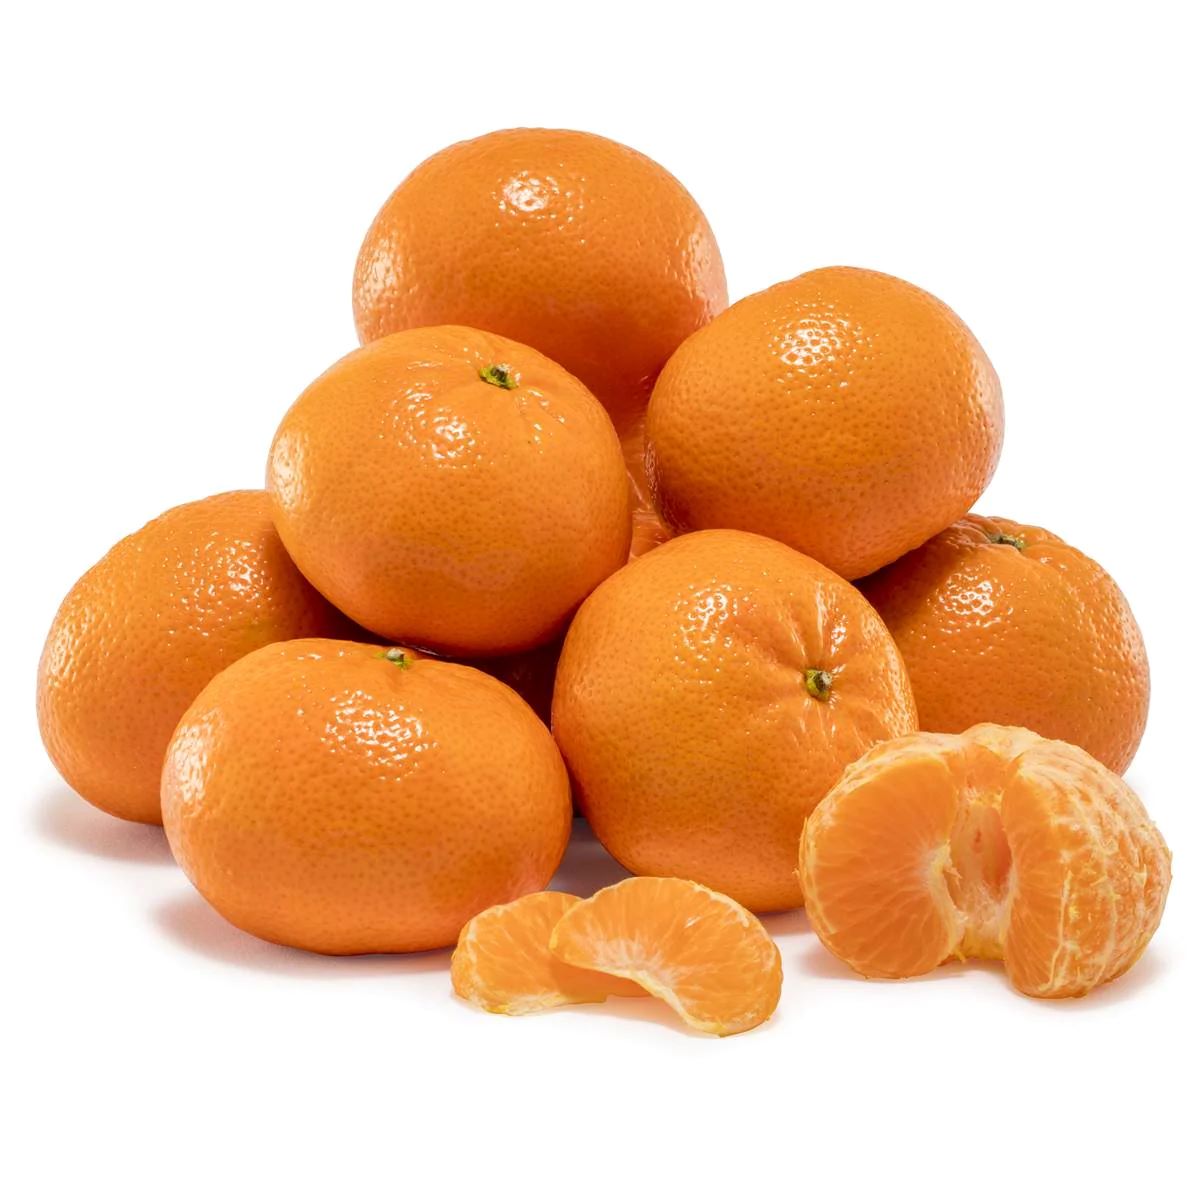 How To Store Mandarins In The Fridge